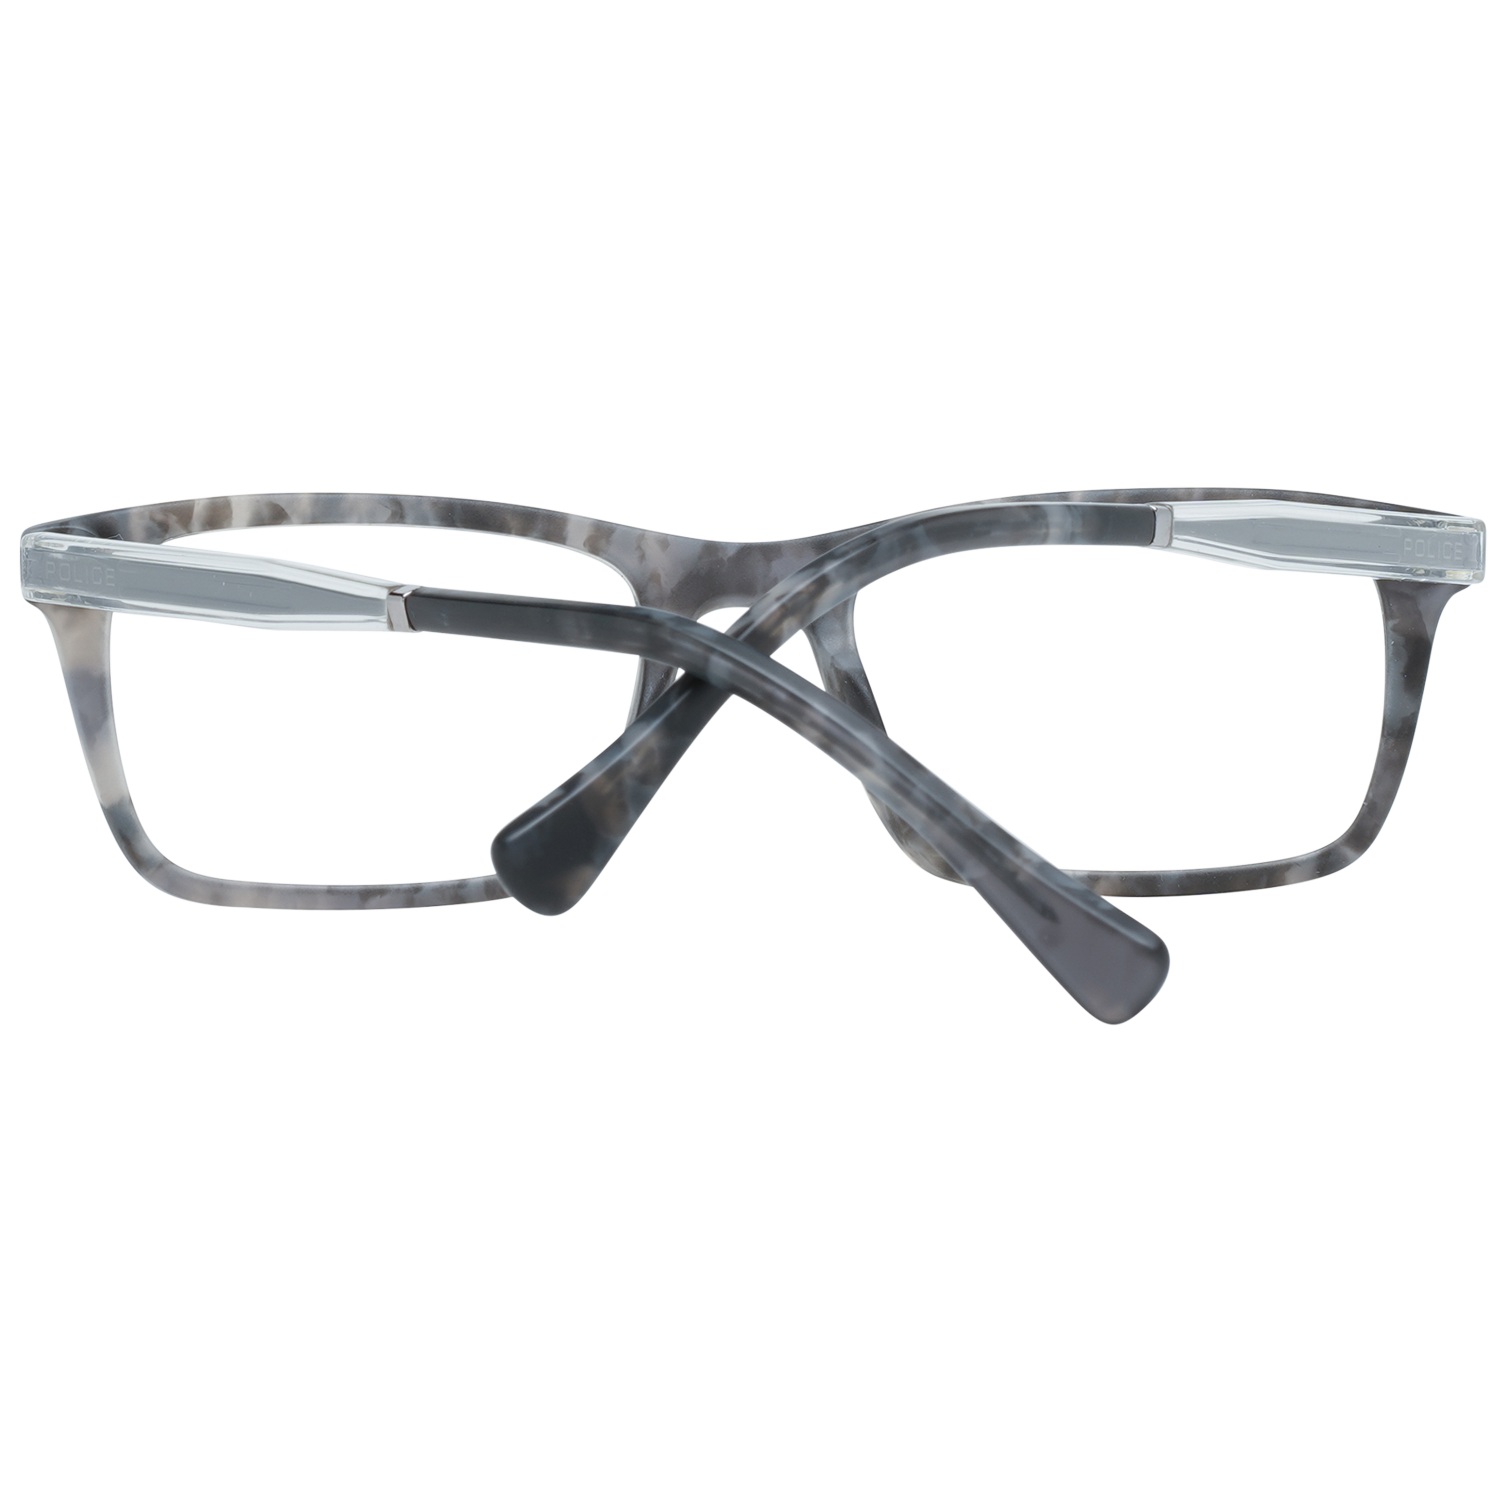 Police Frames Police Glasses Frames VPL262 6K3M 52 Eyeglasses Eyewear UK USA Australia 